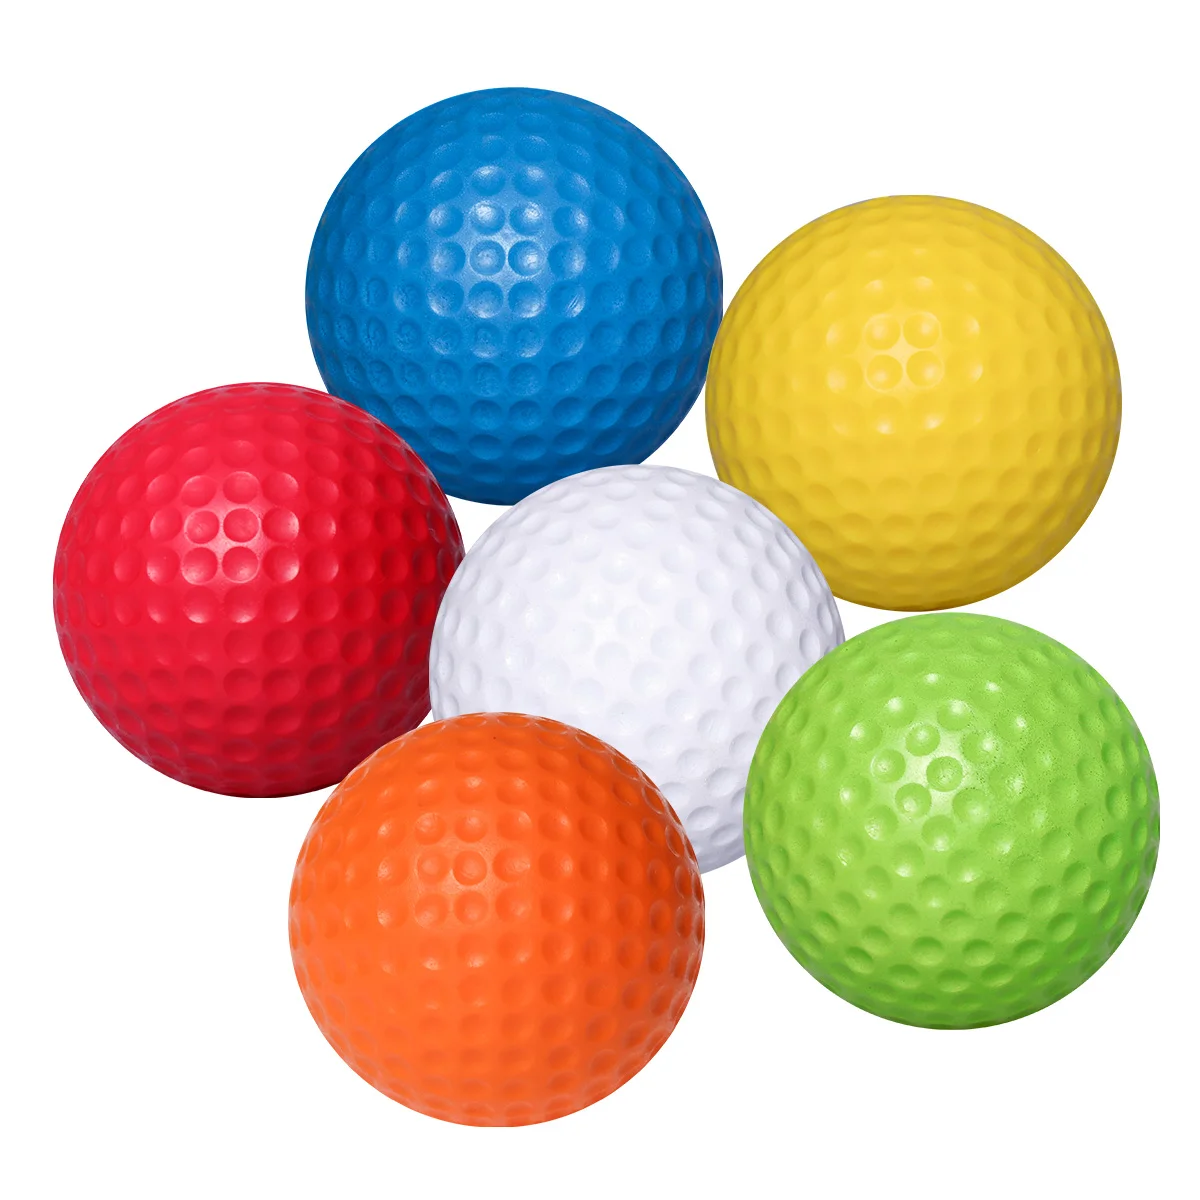 

6pcs Practice Balls Realistic Elastic Training Feel and Limited Flight Training Balls Flexible Practice Balls for Indoor or